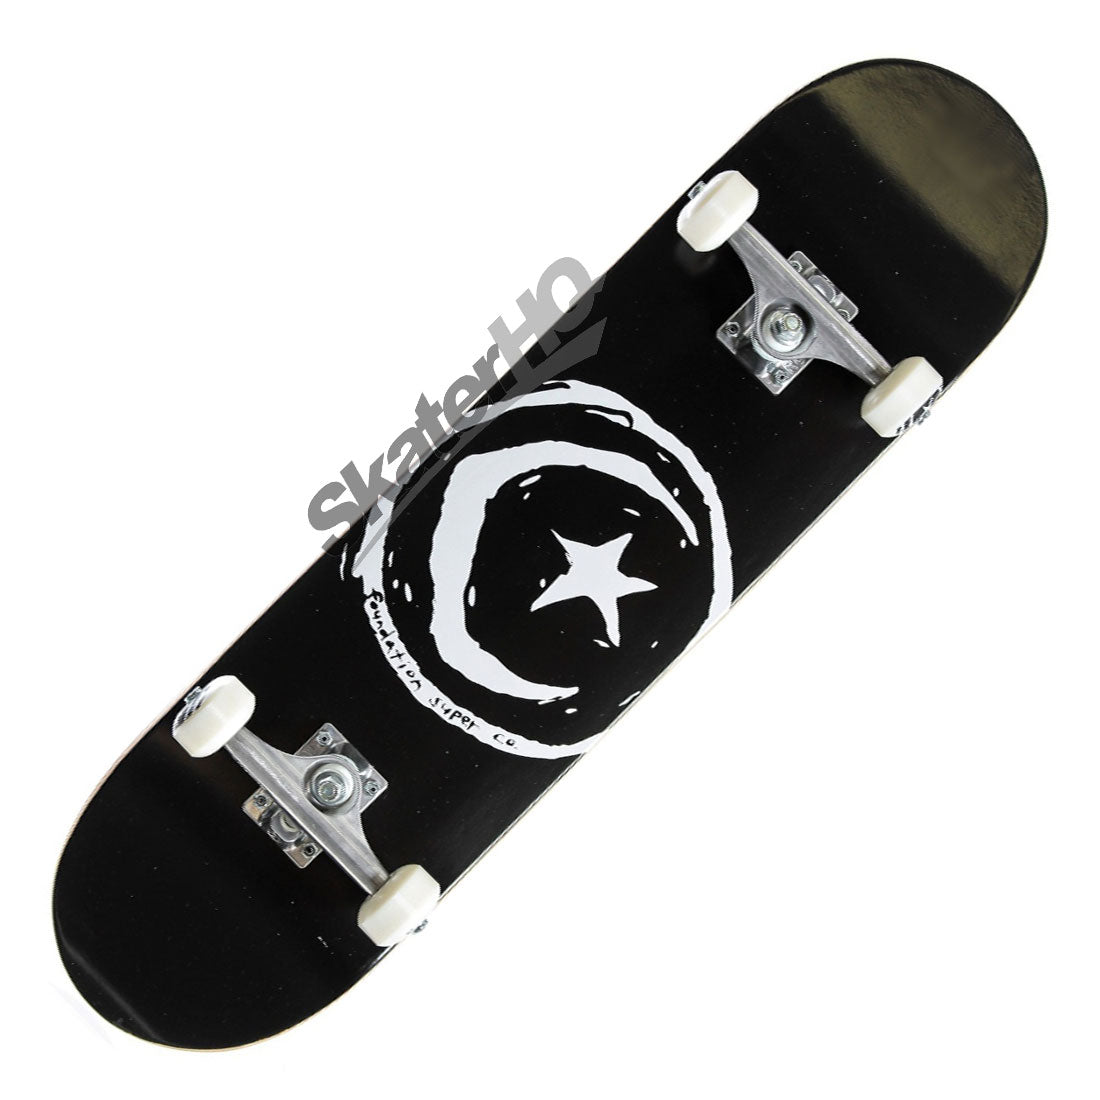 Foundation Star &amp; Moon 8.0 Complete - Black Skateboard Completes Modern Street